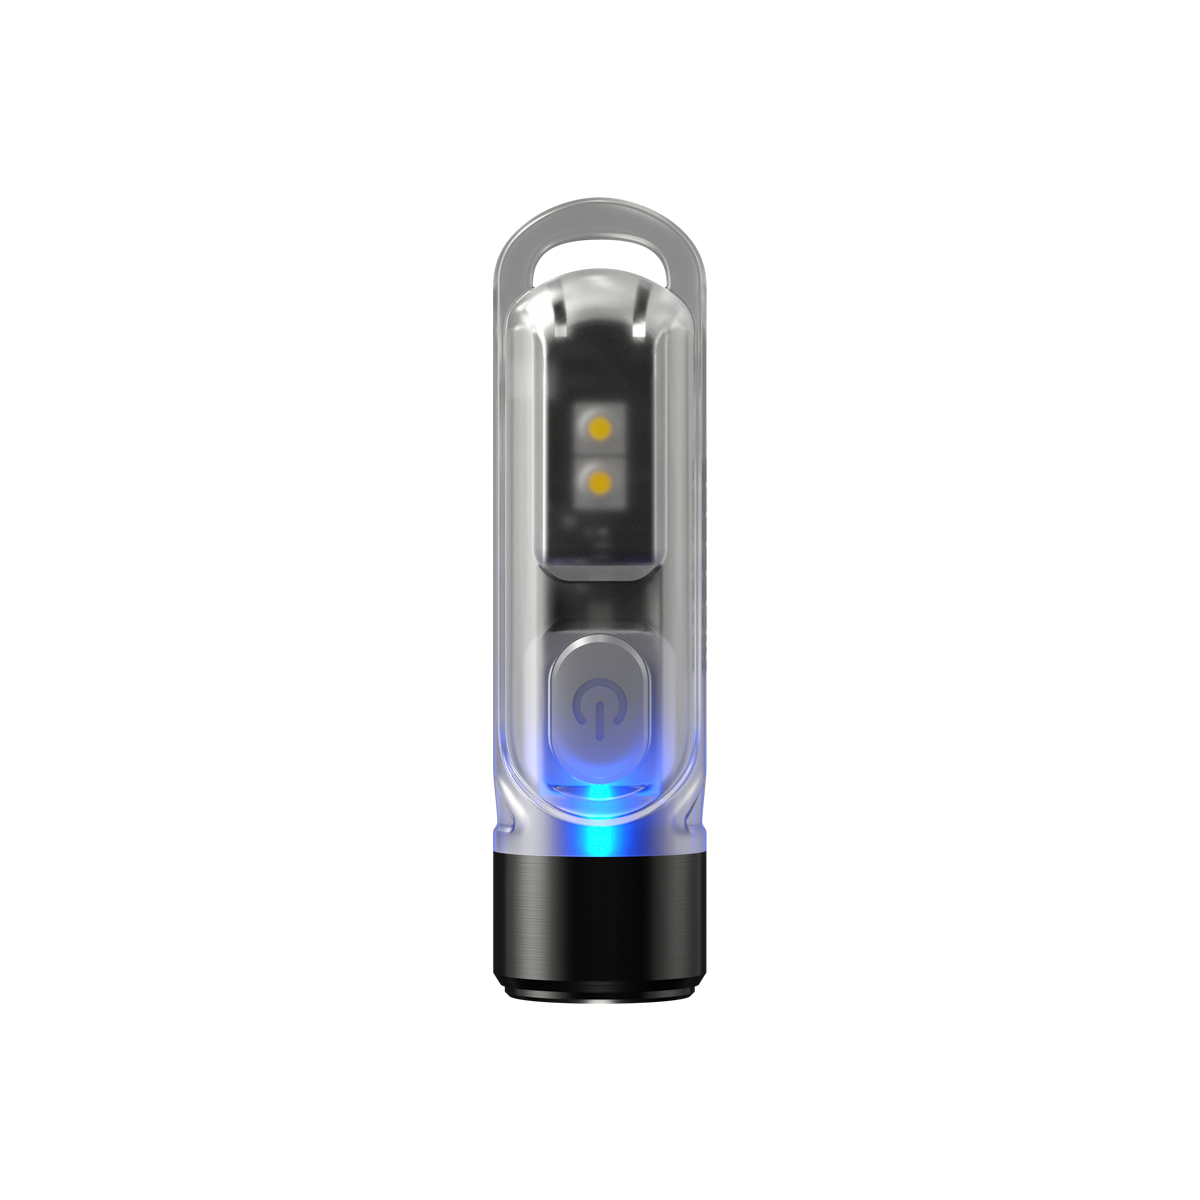 Nitecore TIKI UV Luminus SST-10-UV LED 1000 mW UV 365nm Ultraviolet Flashlight Rechargeable  EDC Keychain Light